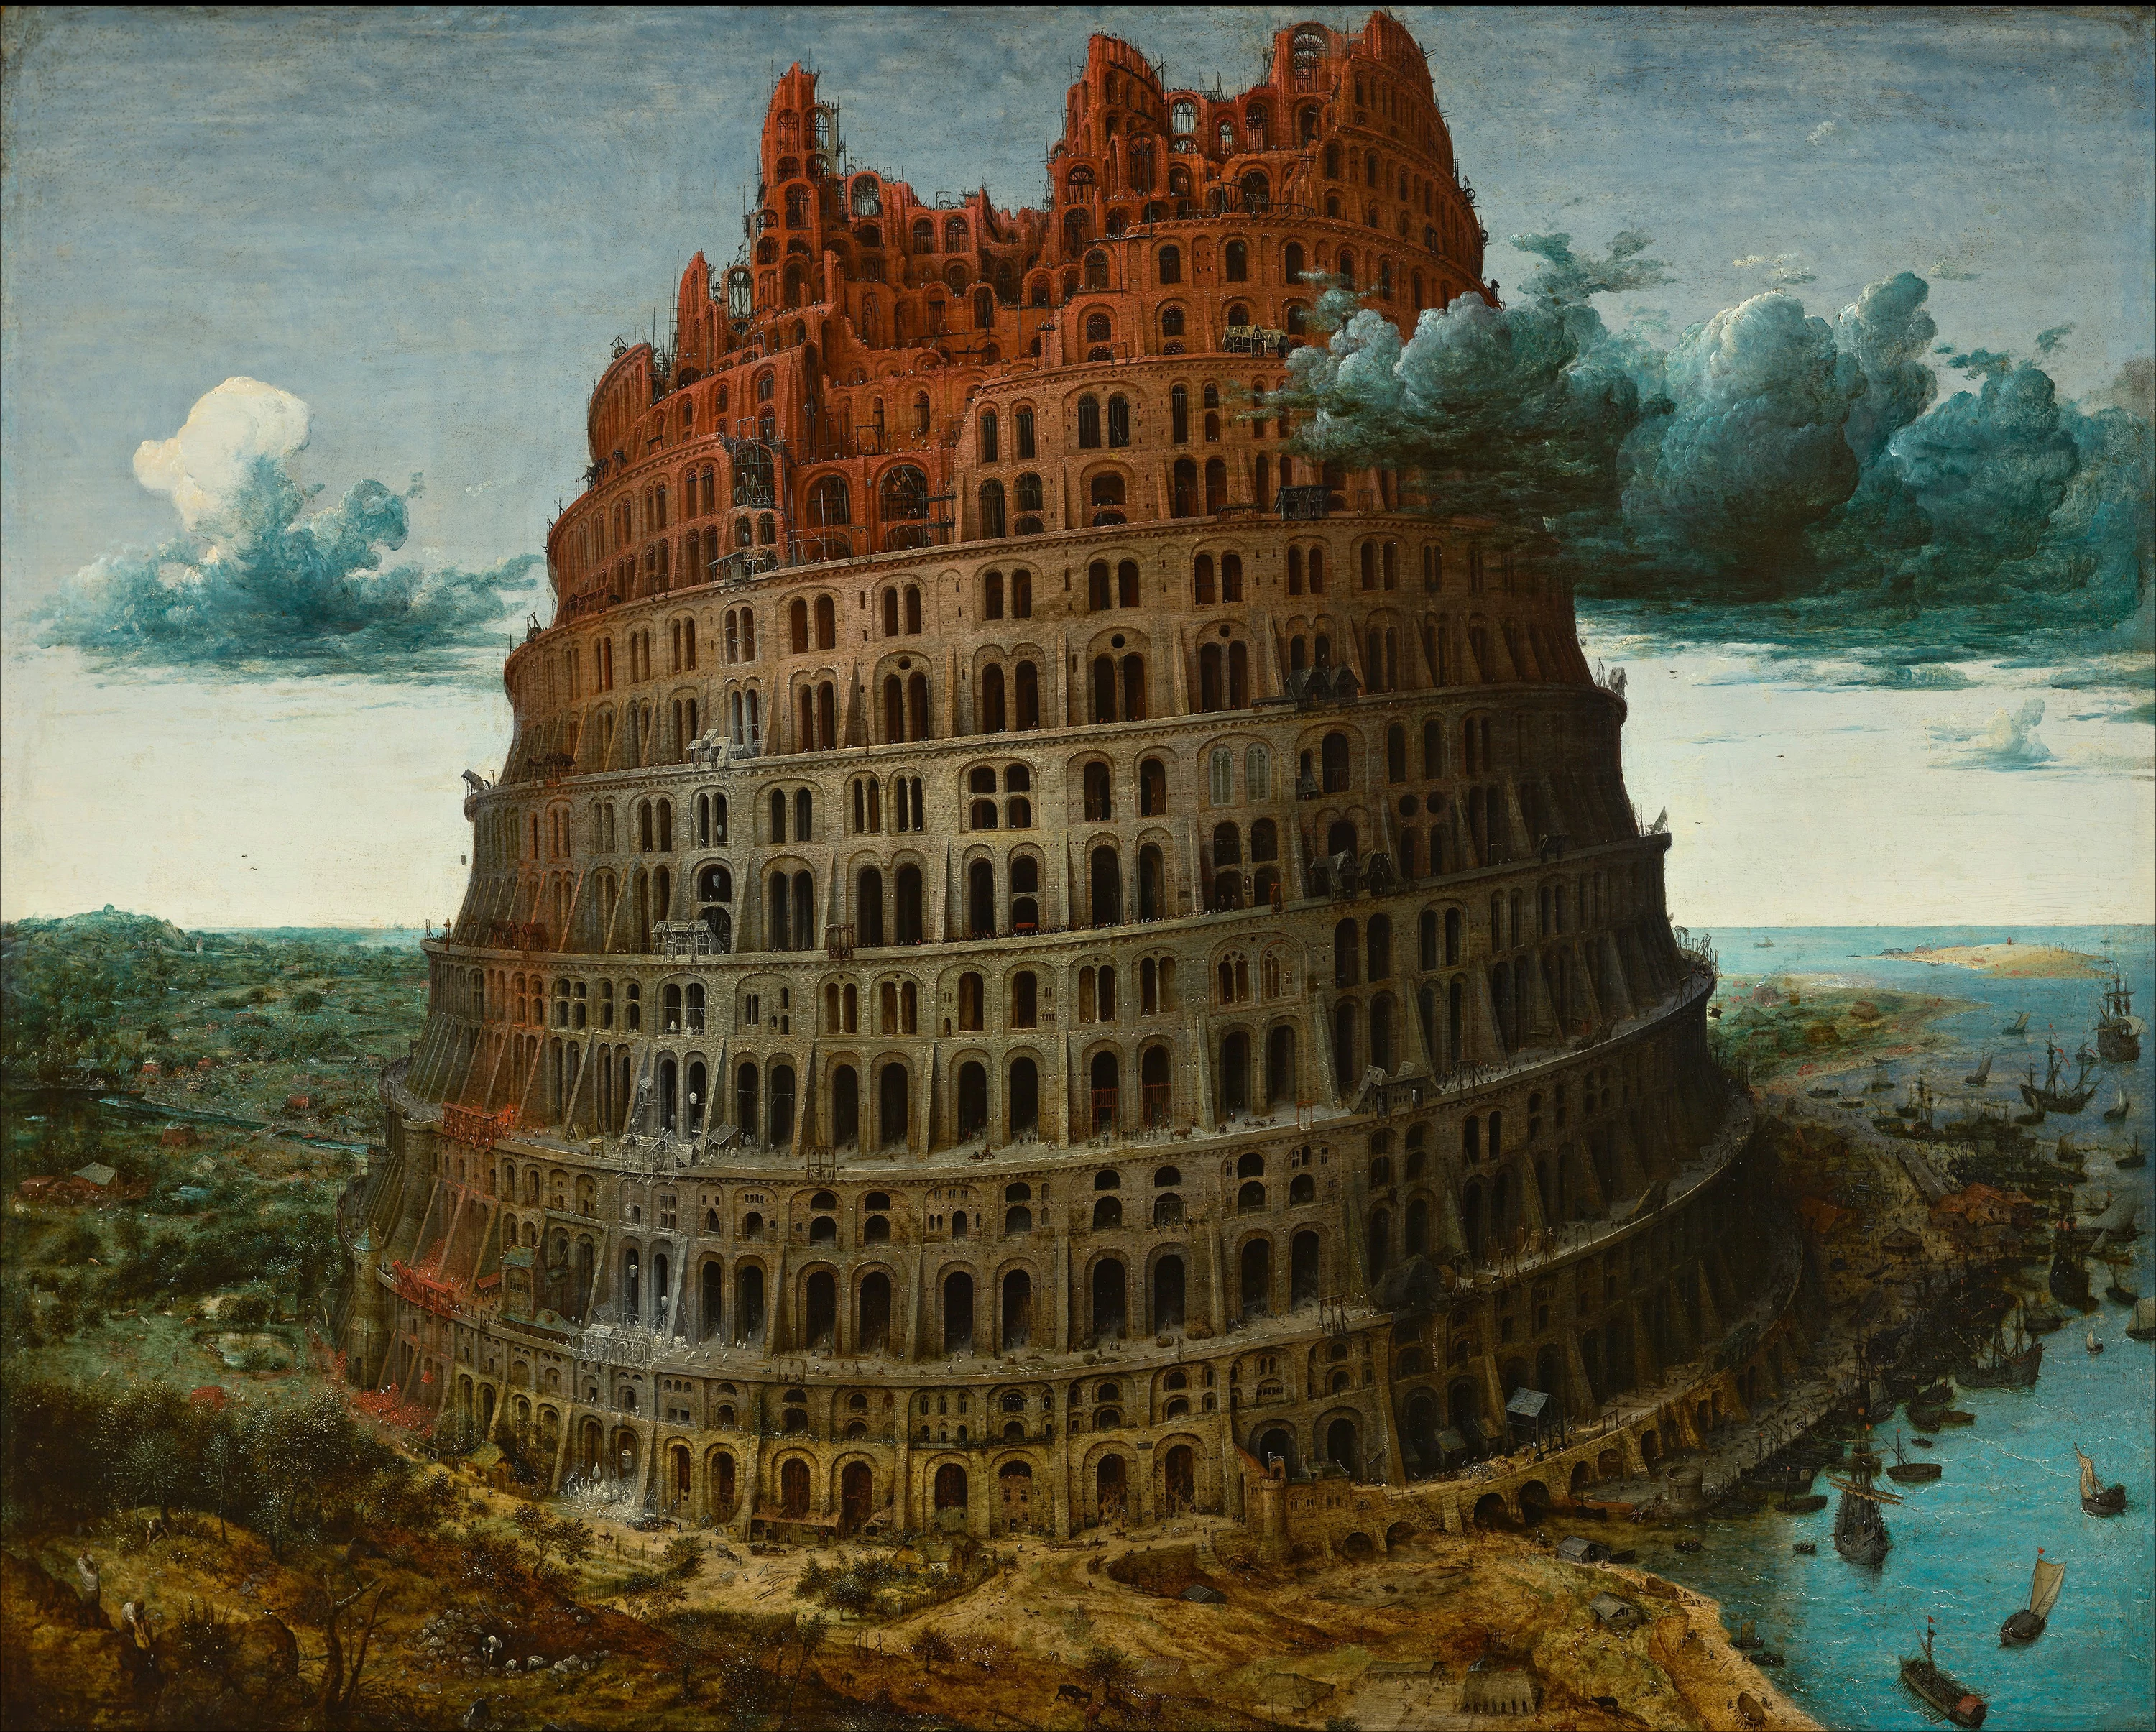 The "Little" Tower of Babel, Pieter Bruegel the Elder